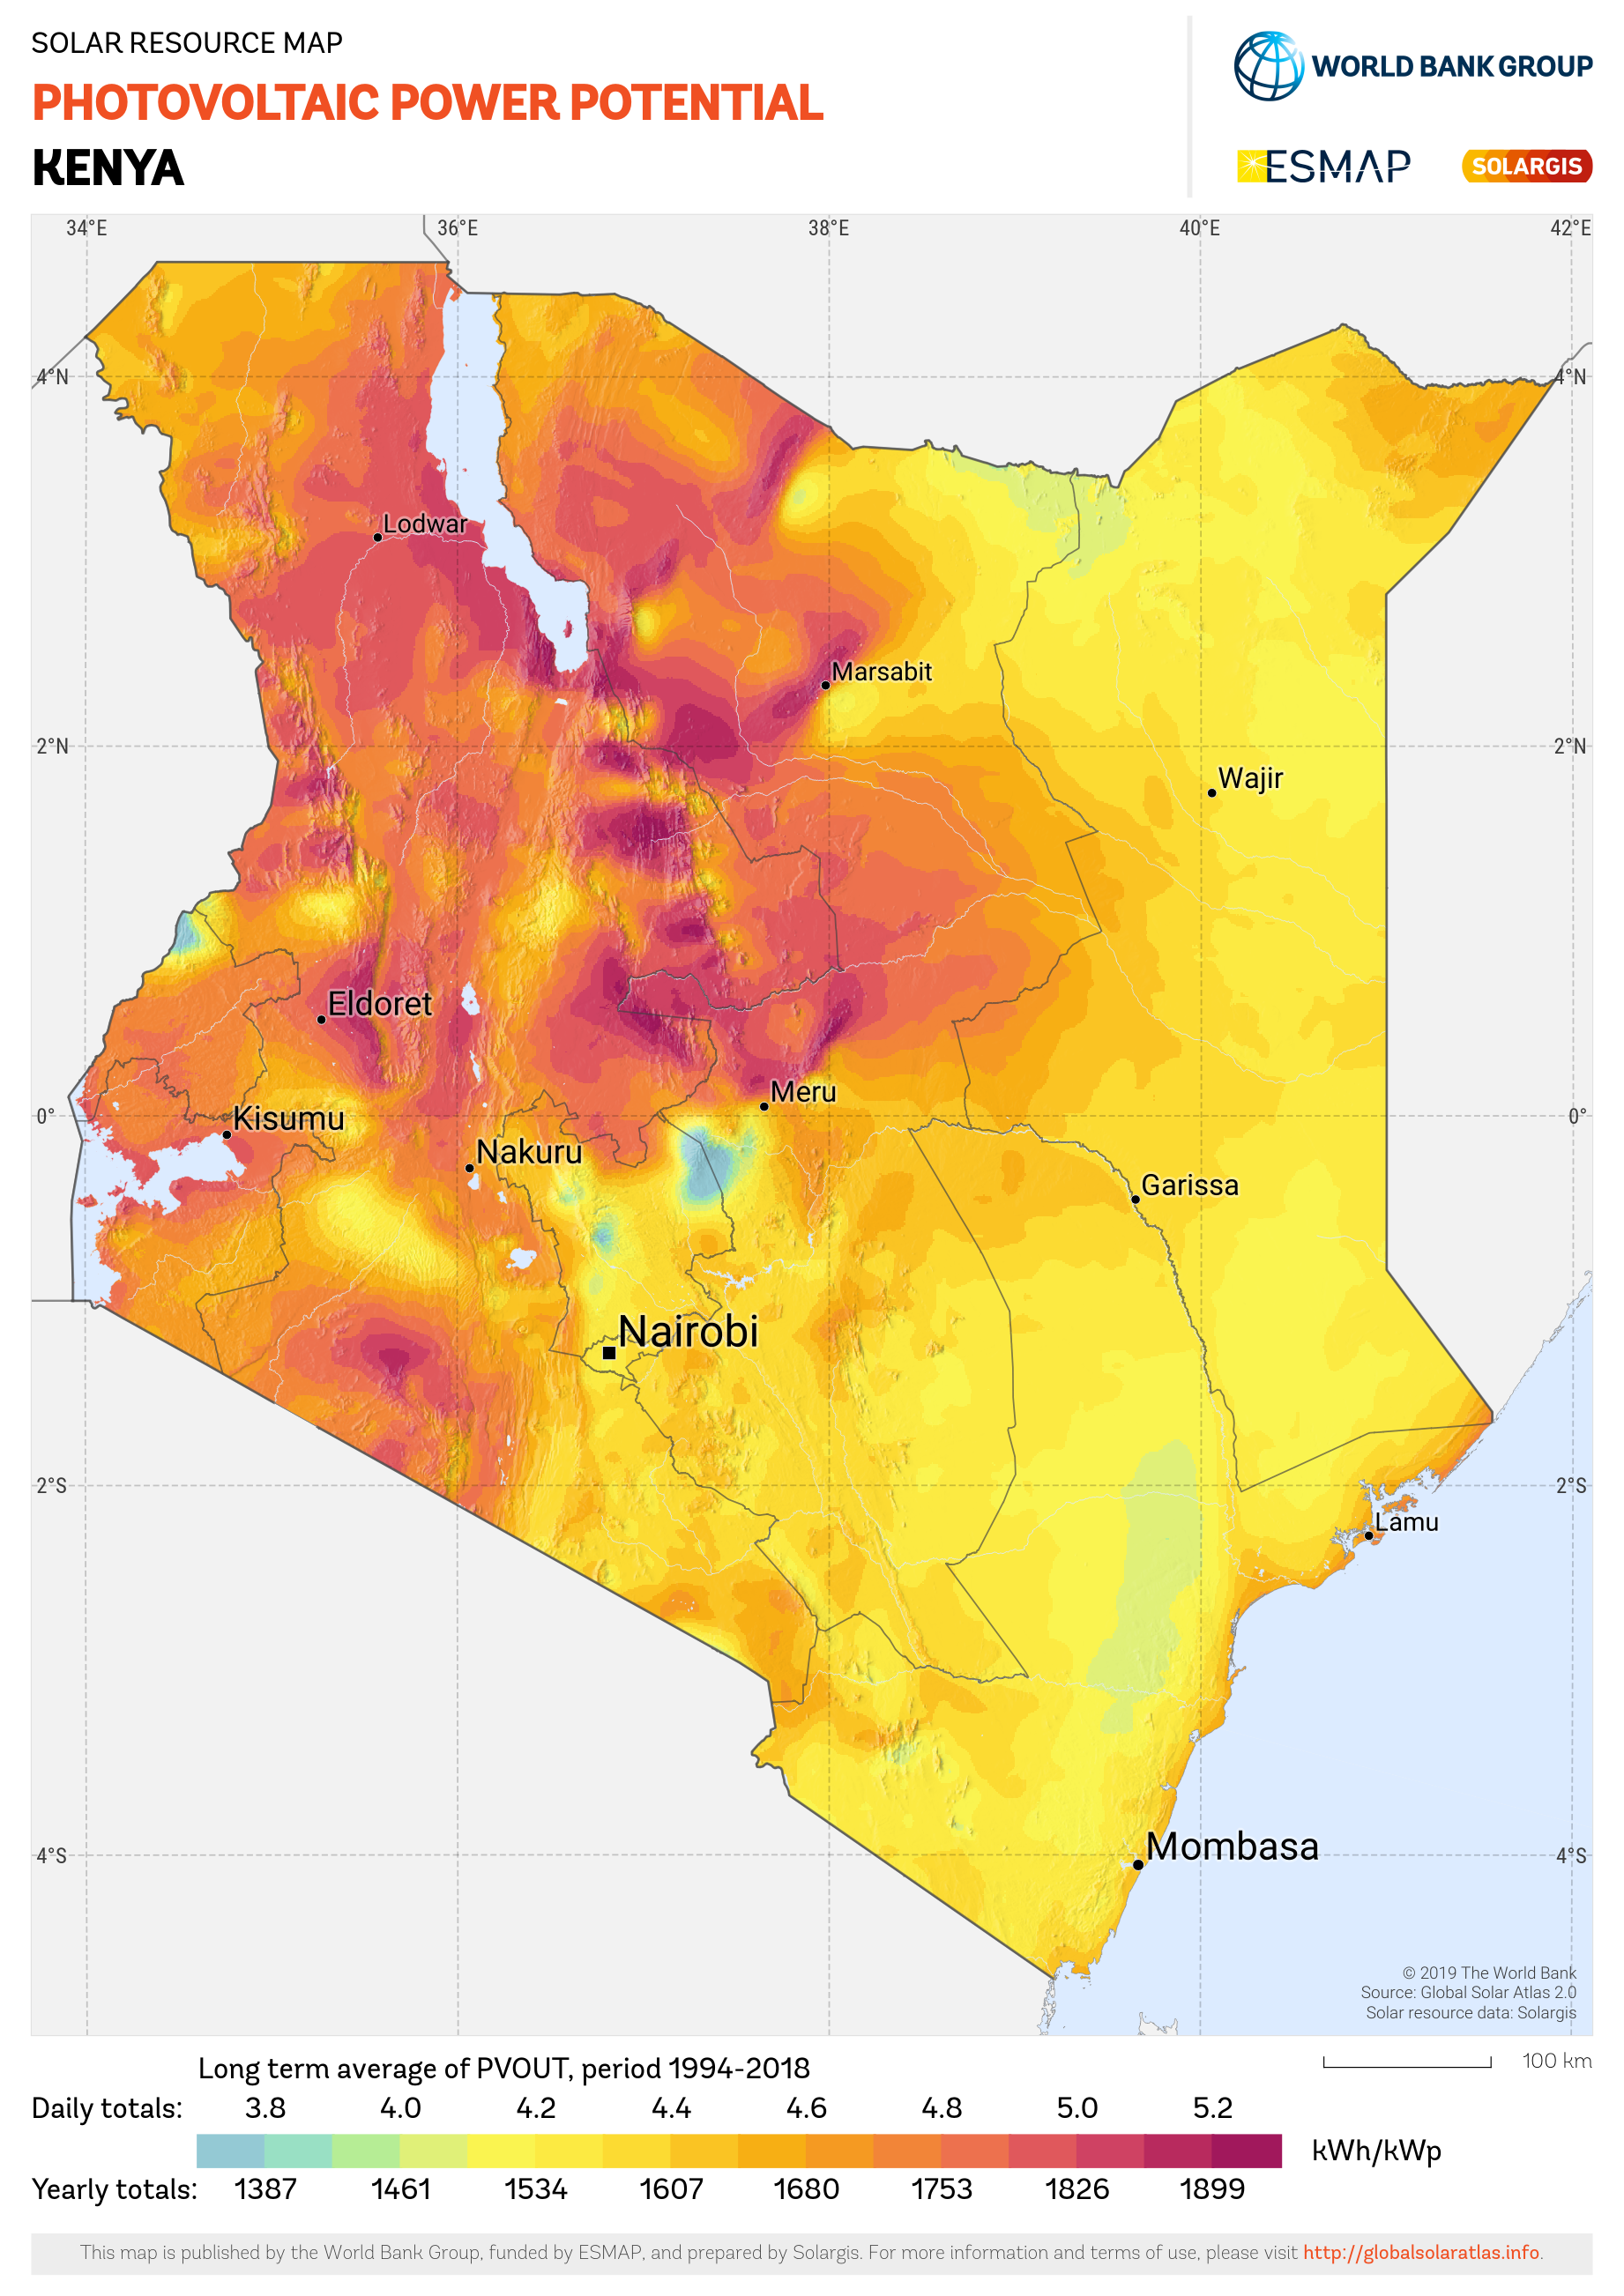 Kenya's photovoltaic power potential